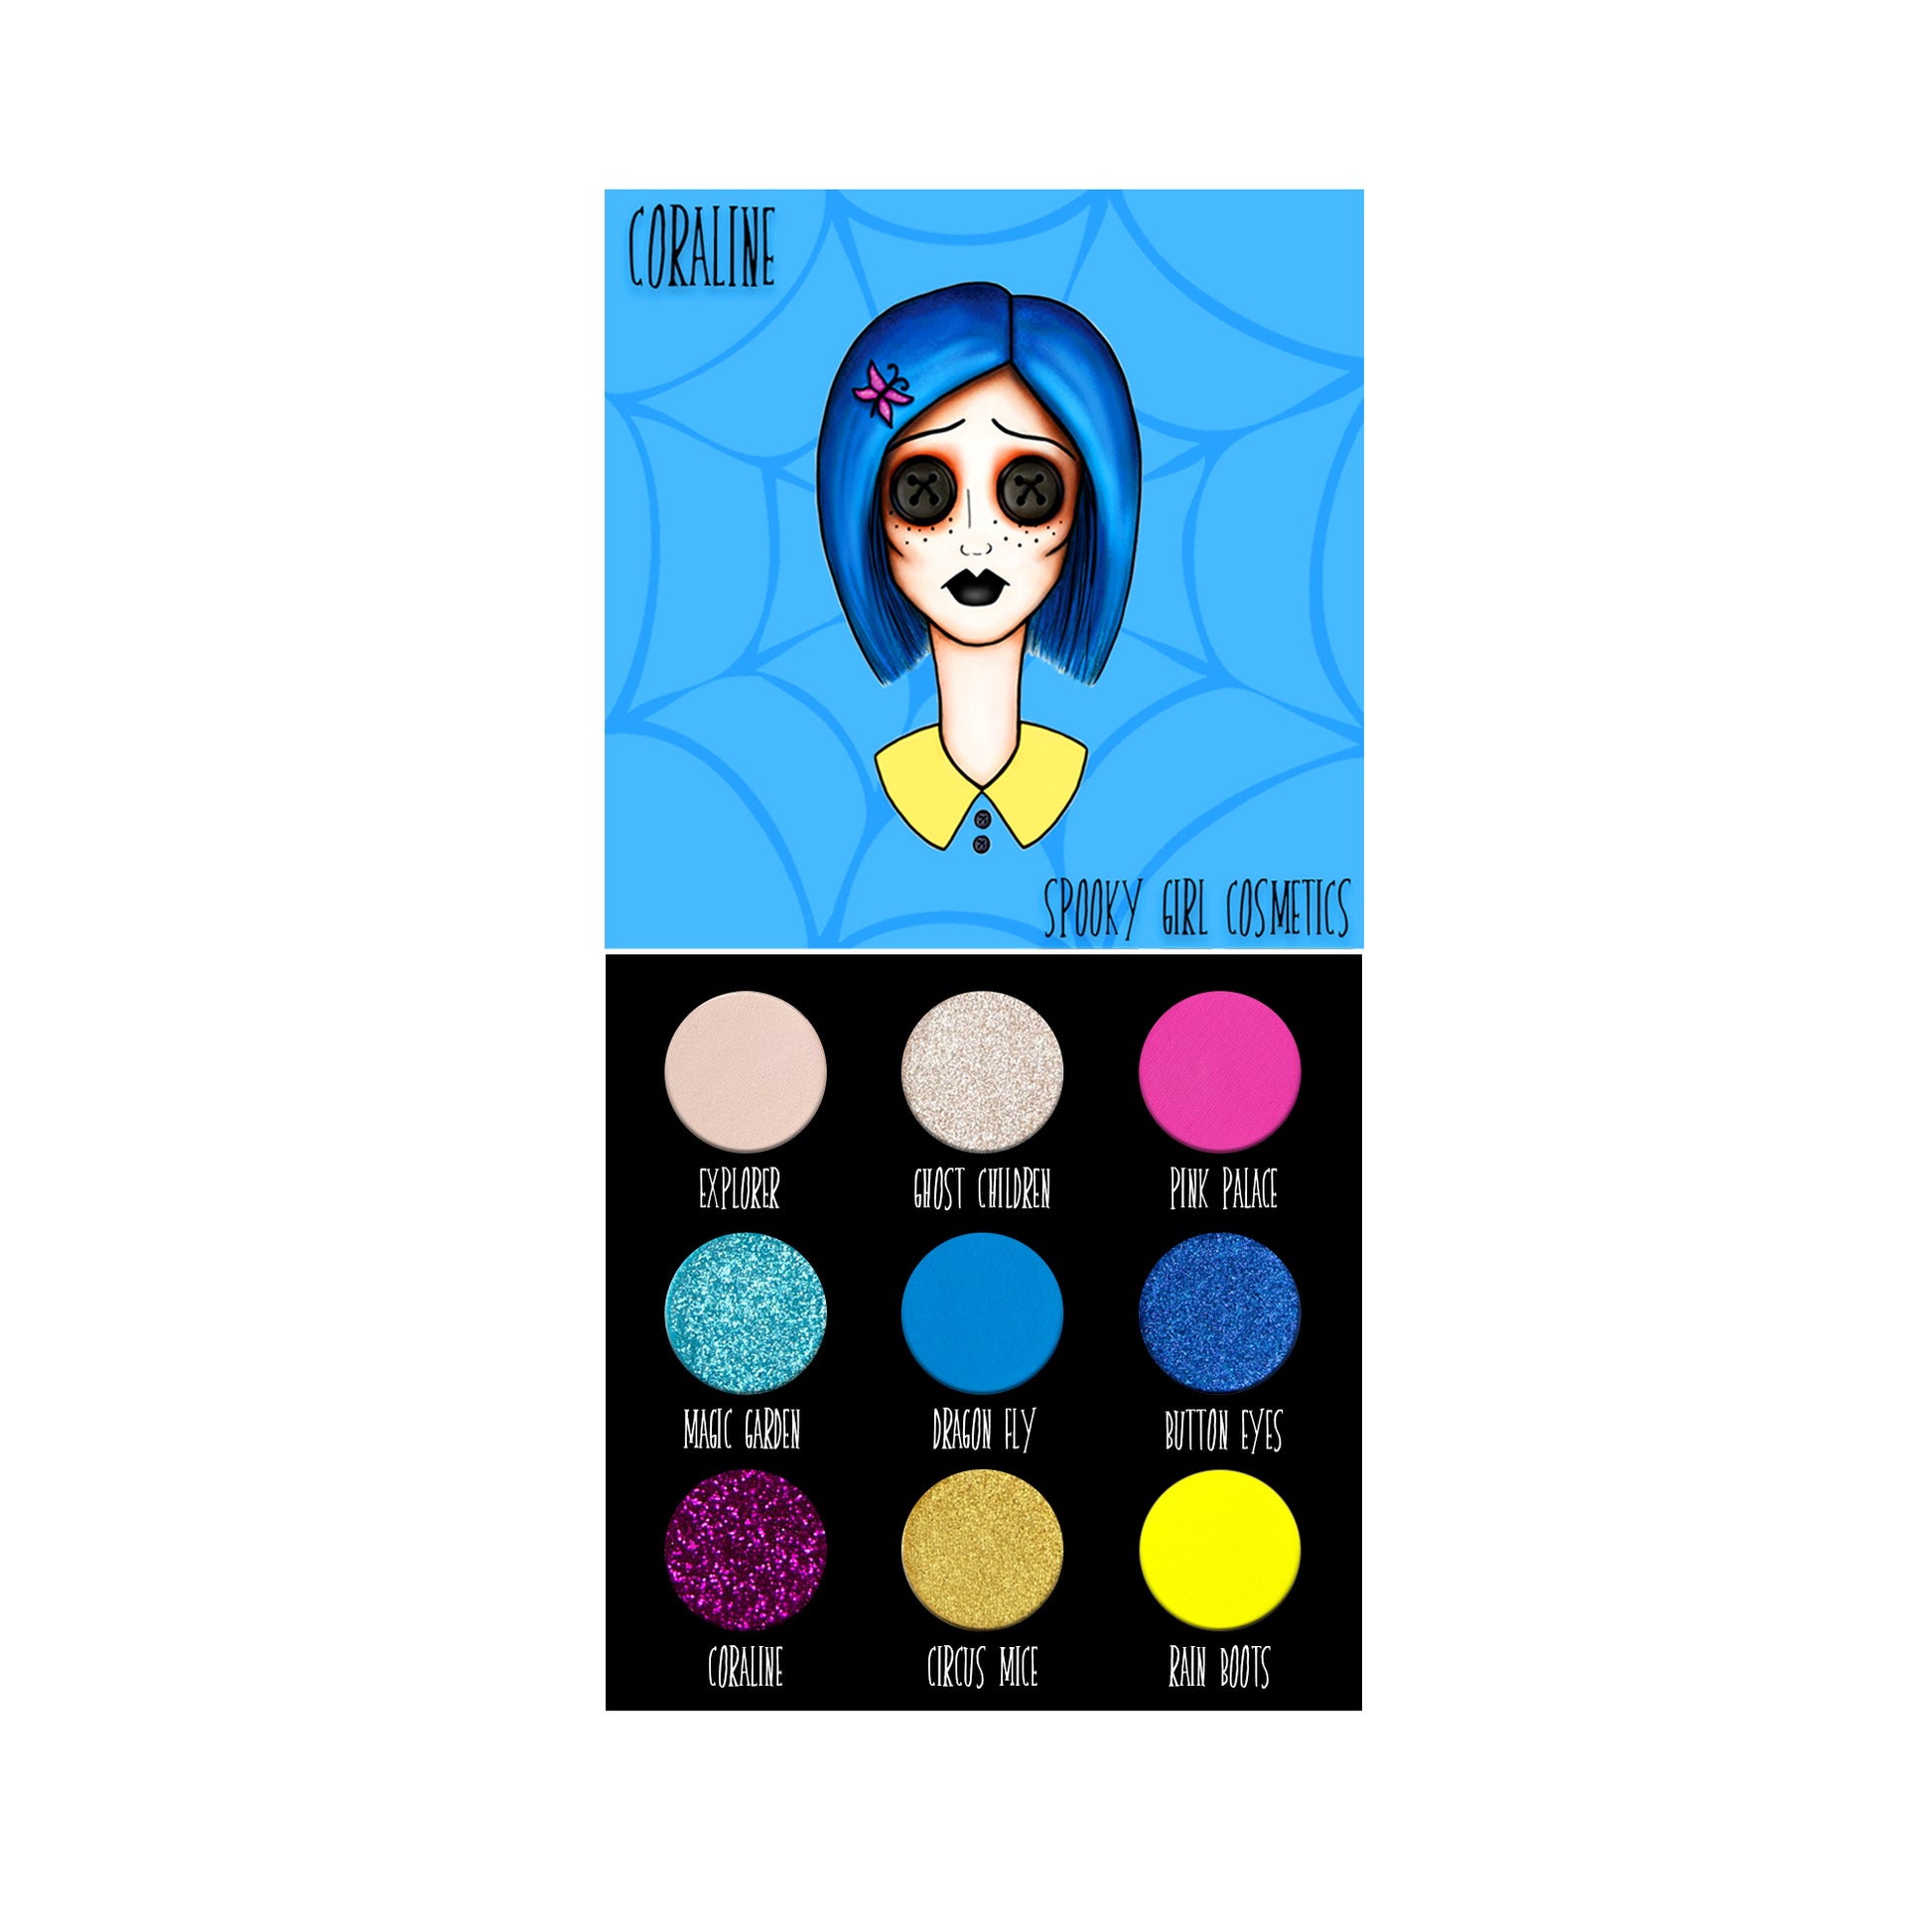 Spooky Girl Eyeshadow Palette inspired by Coraline